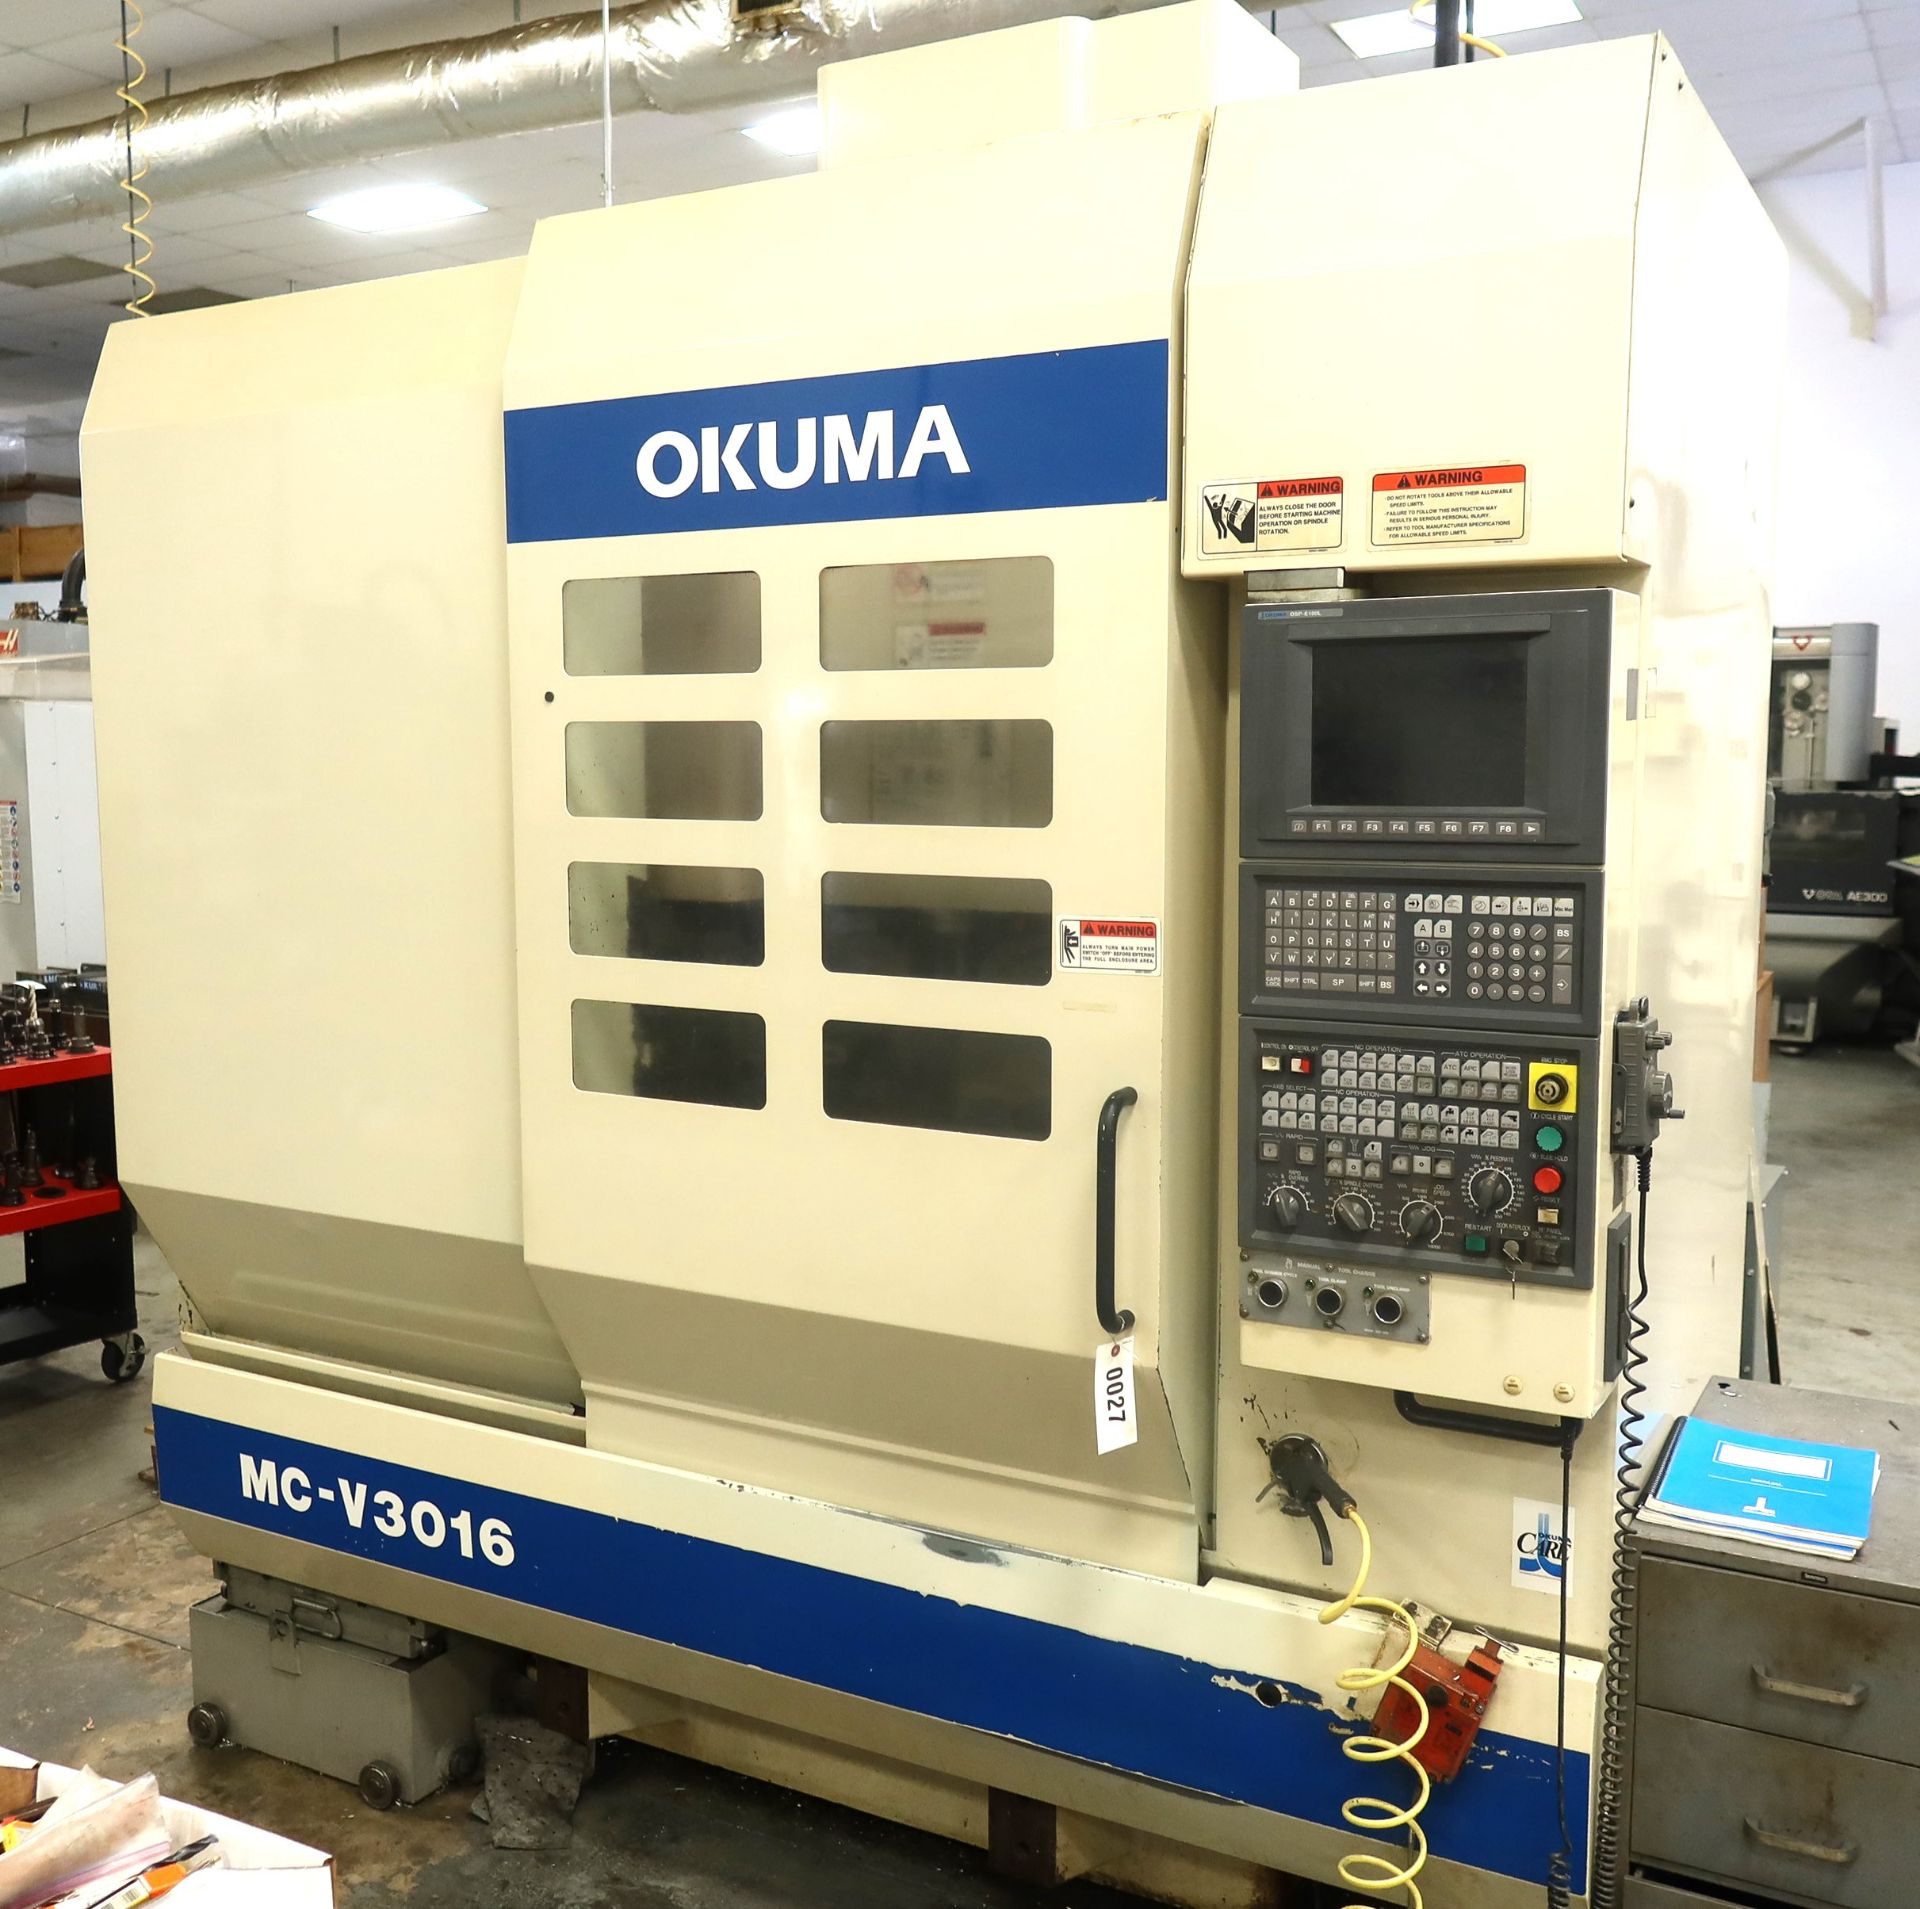 2003 OKUMA MC-V3016 5-AXIS CNC VERTICAL MACHINING CENTER, SN 0038 - Image 7 of 12